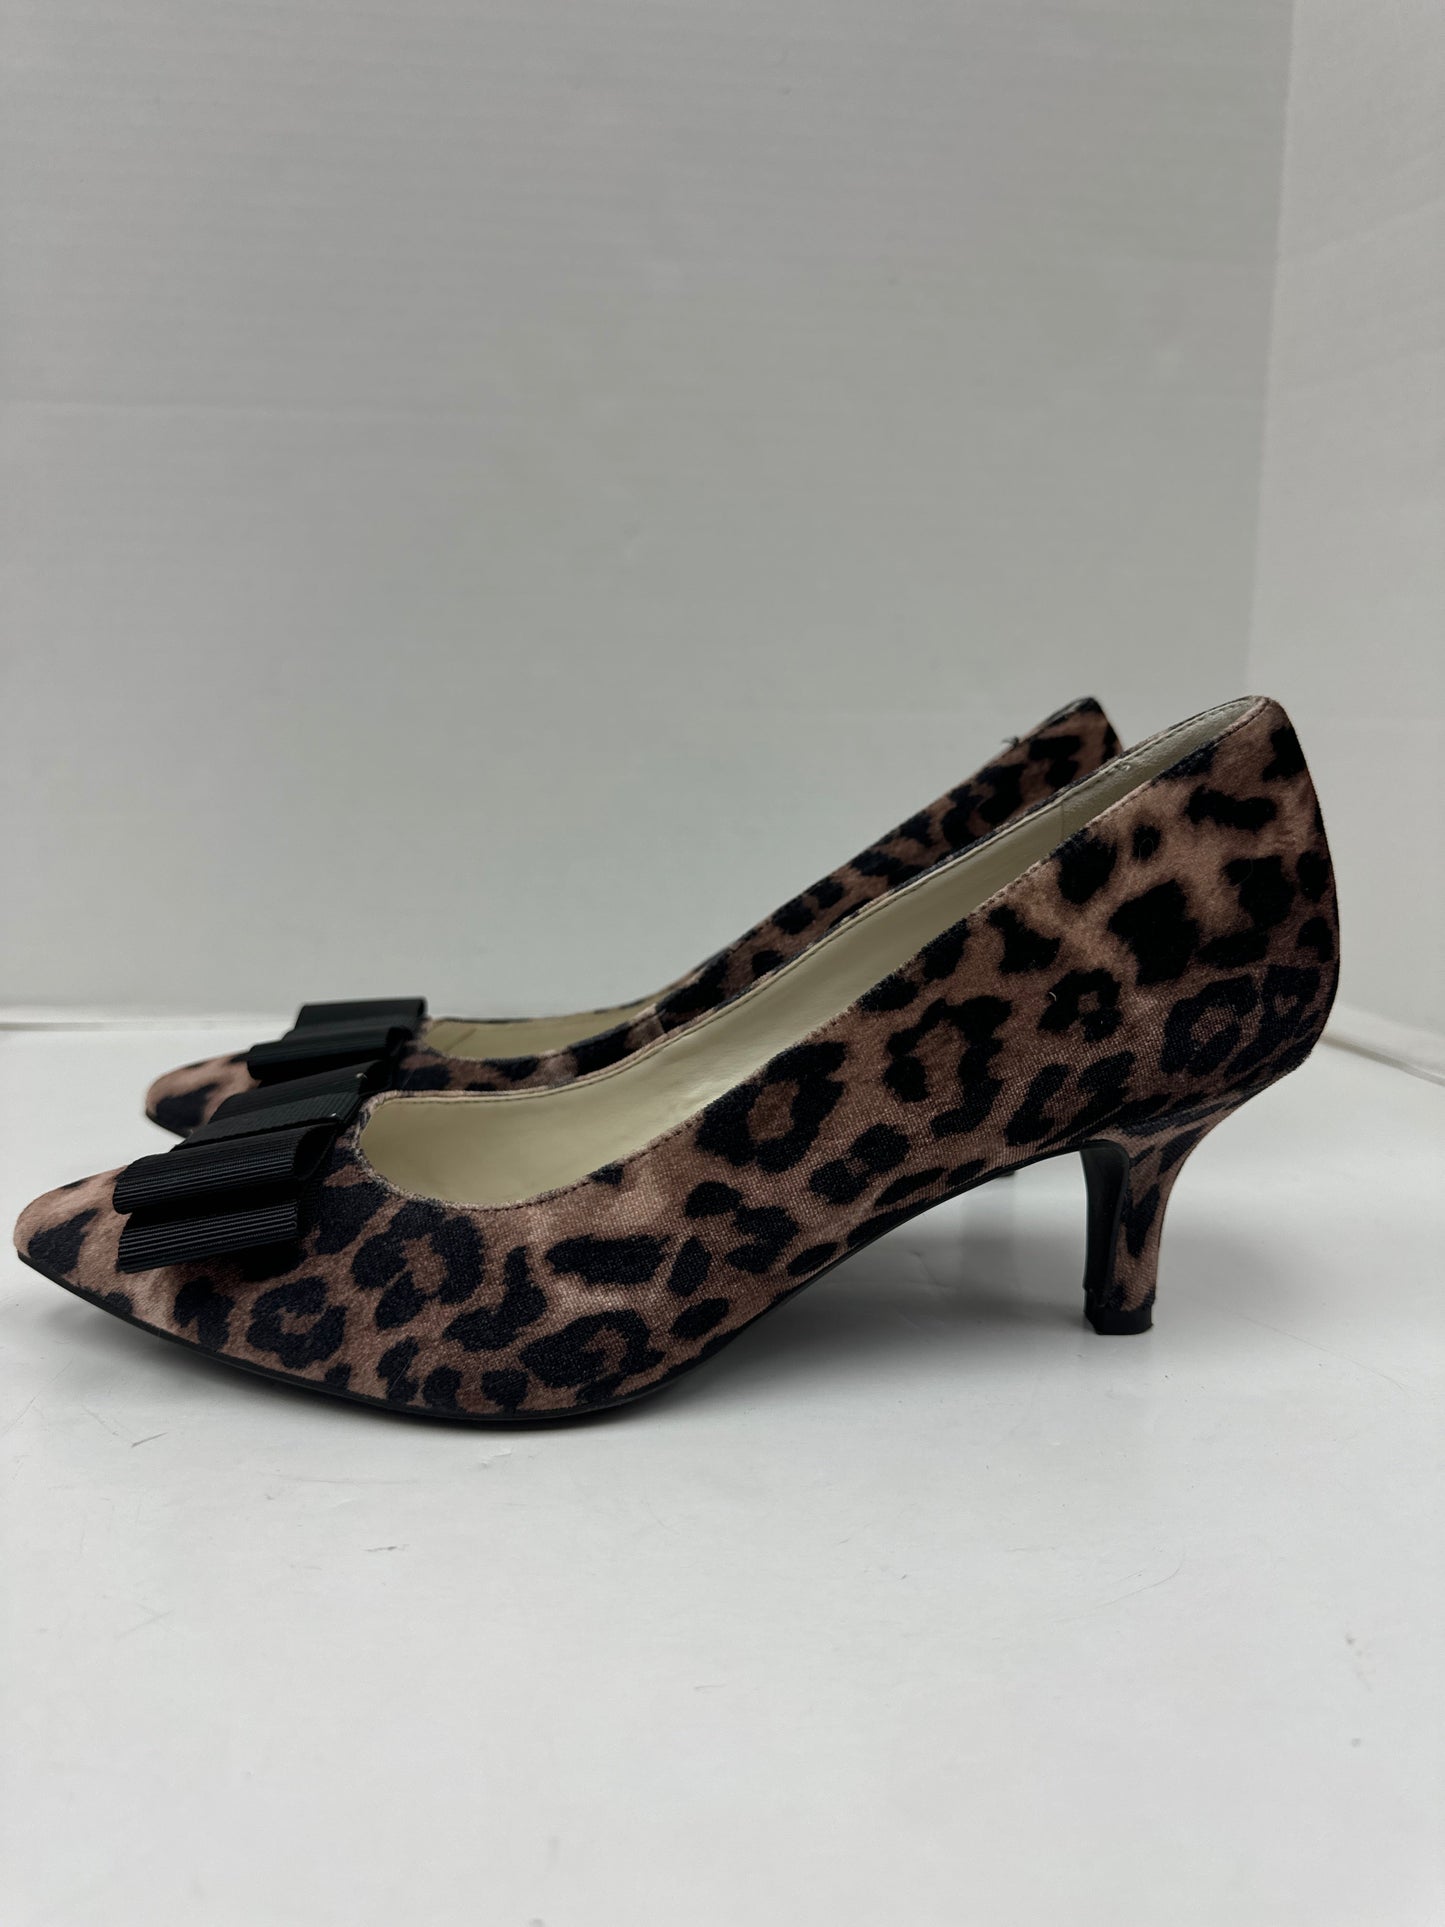 Animal Print Shoes Heels Kitten Anne Klein, Size 8.5